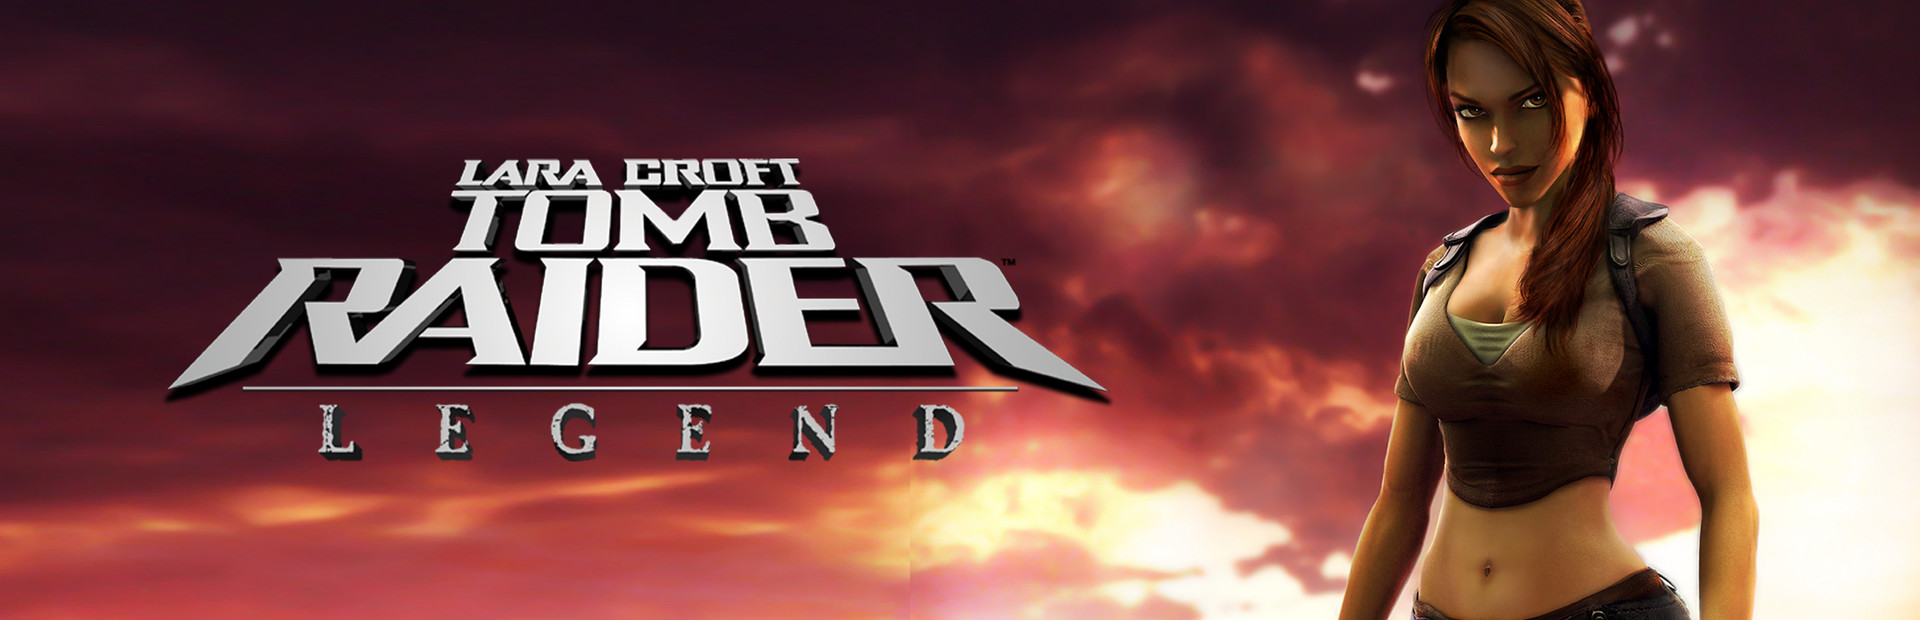 Tomb Raider: Legend cover image